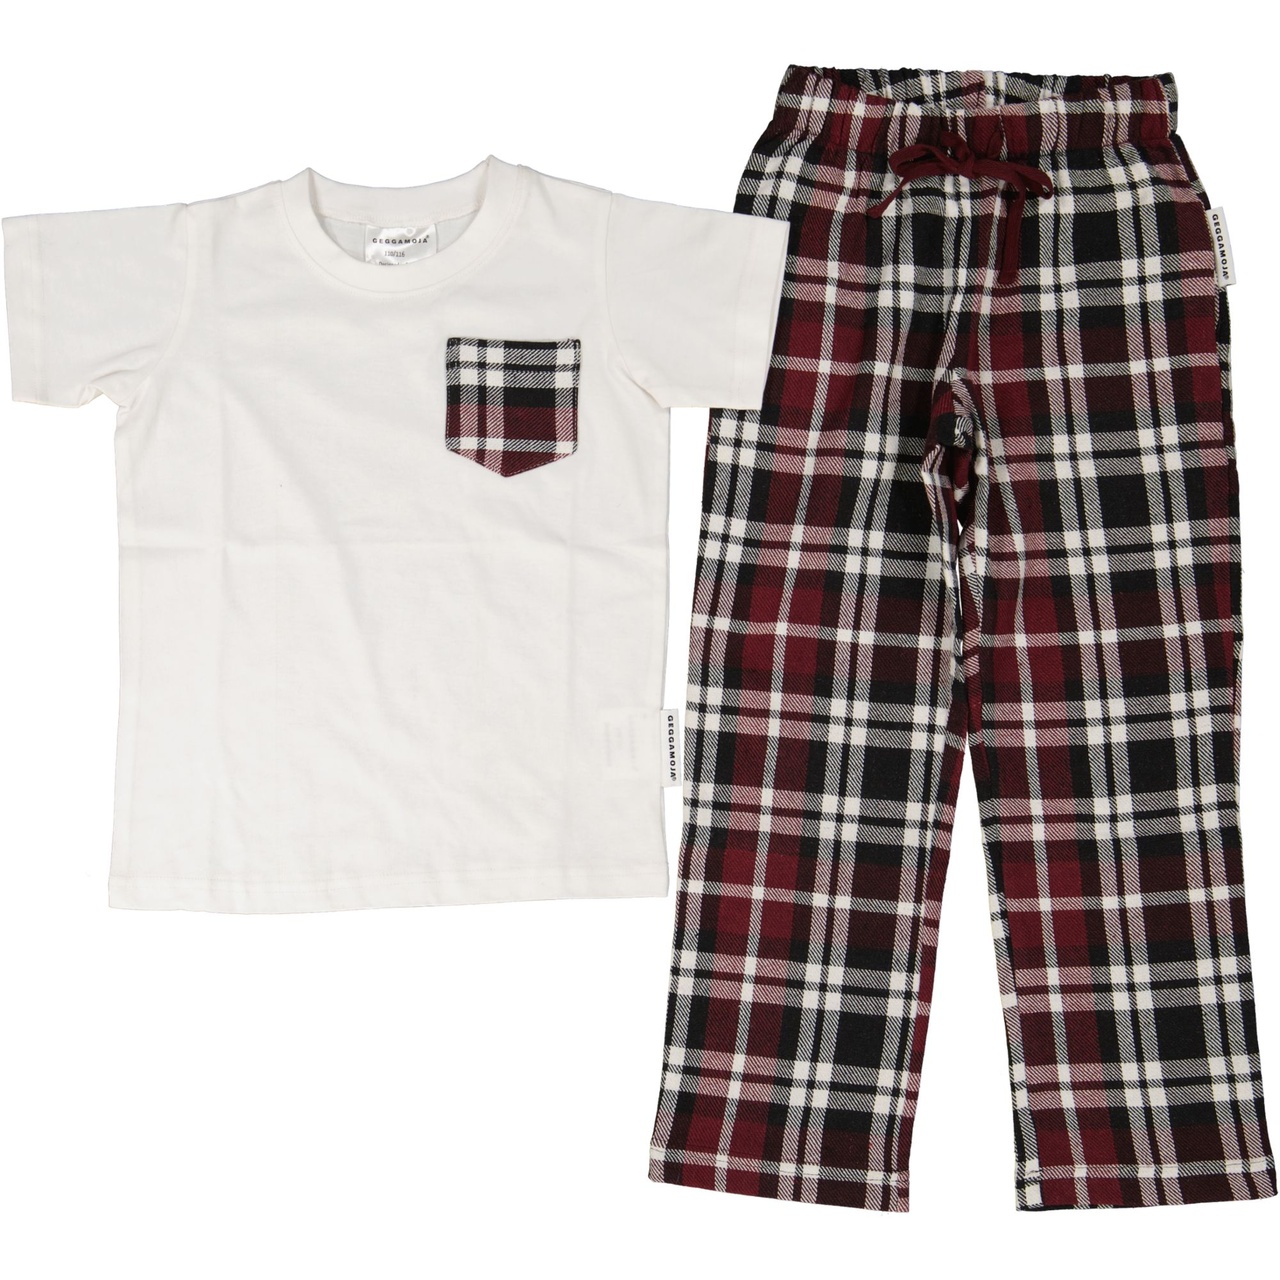 Flannel twp piece pyjamas kids Burgundy check 110/116